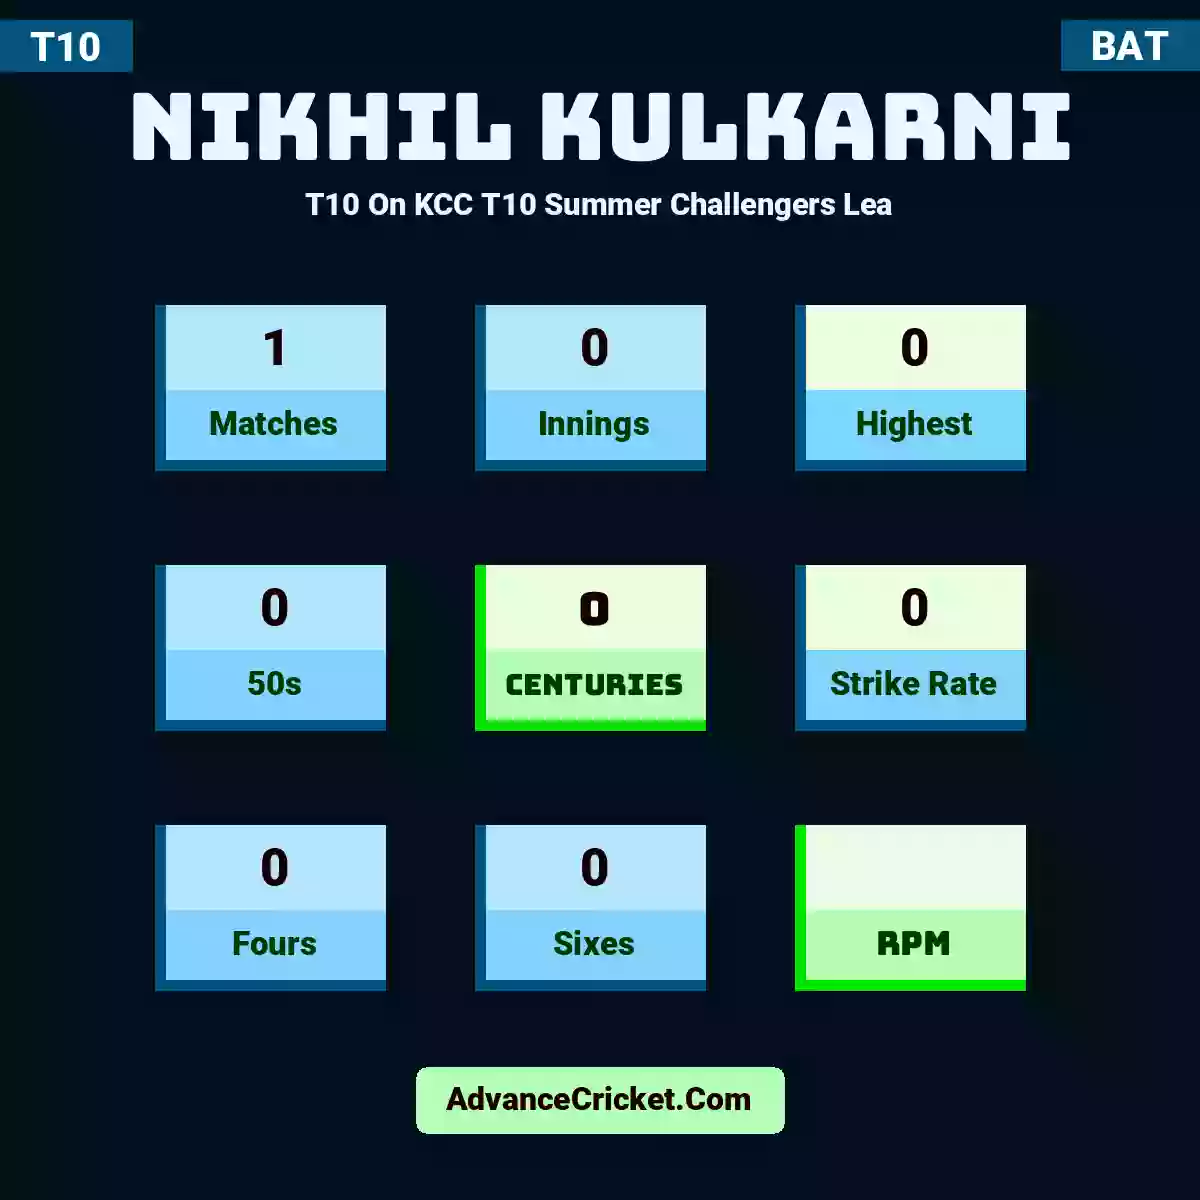 Nikhil Kulkarni T10  On KCC T10 Summer Challengers Lea, Nikhil Kulkarni played 1 matches, scored 0 runs as highest, 0 half-centuries, and 0 centuries, with a strike rate of 0. N.Kulkarni hit 0 fours and 0 sixes.